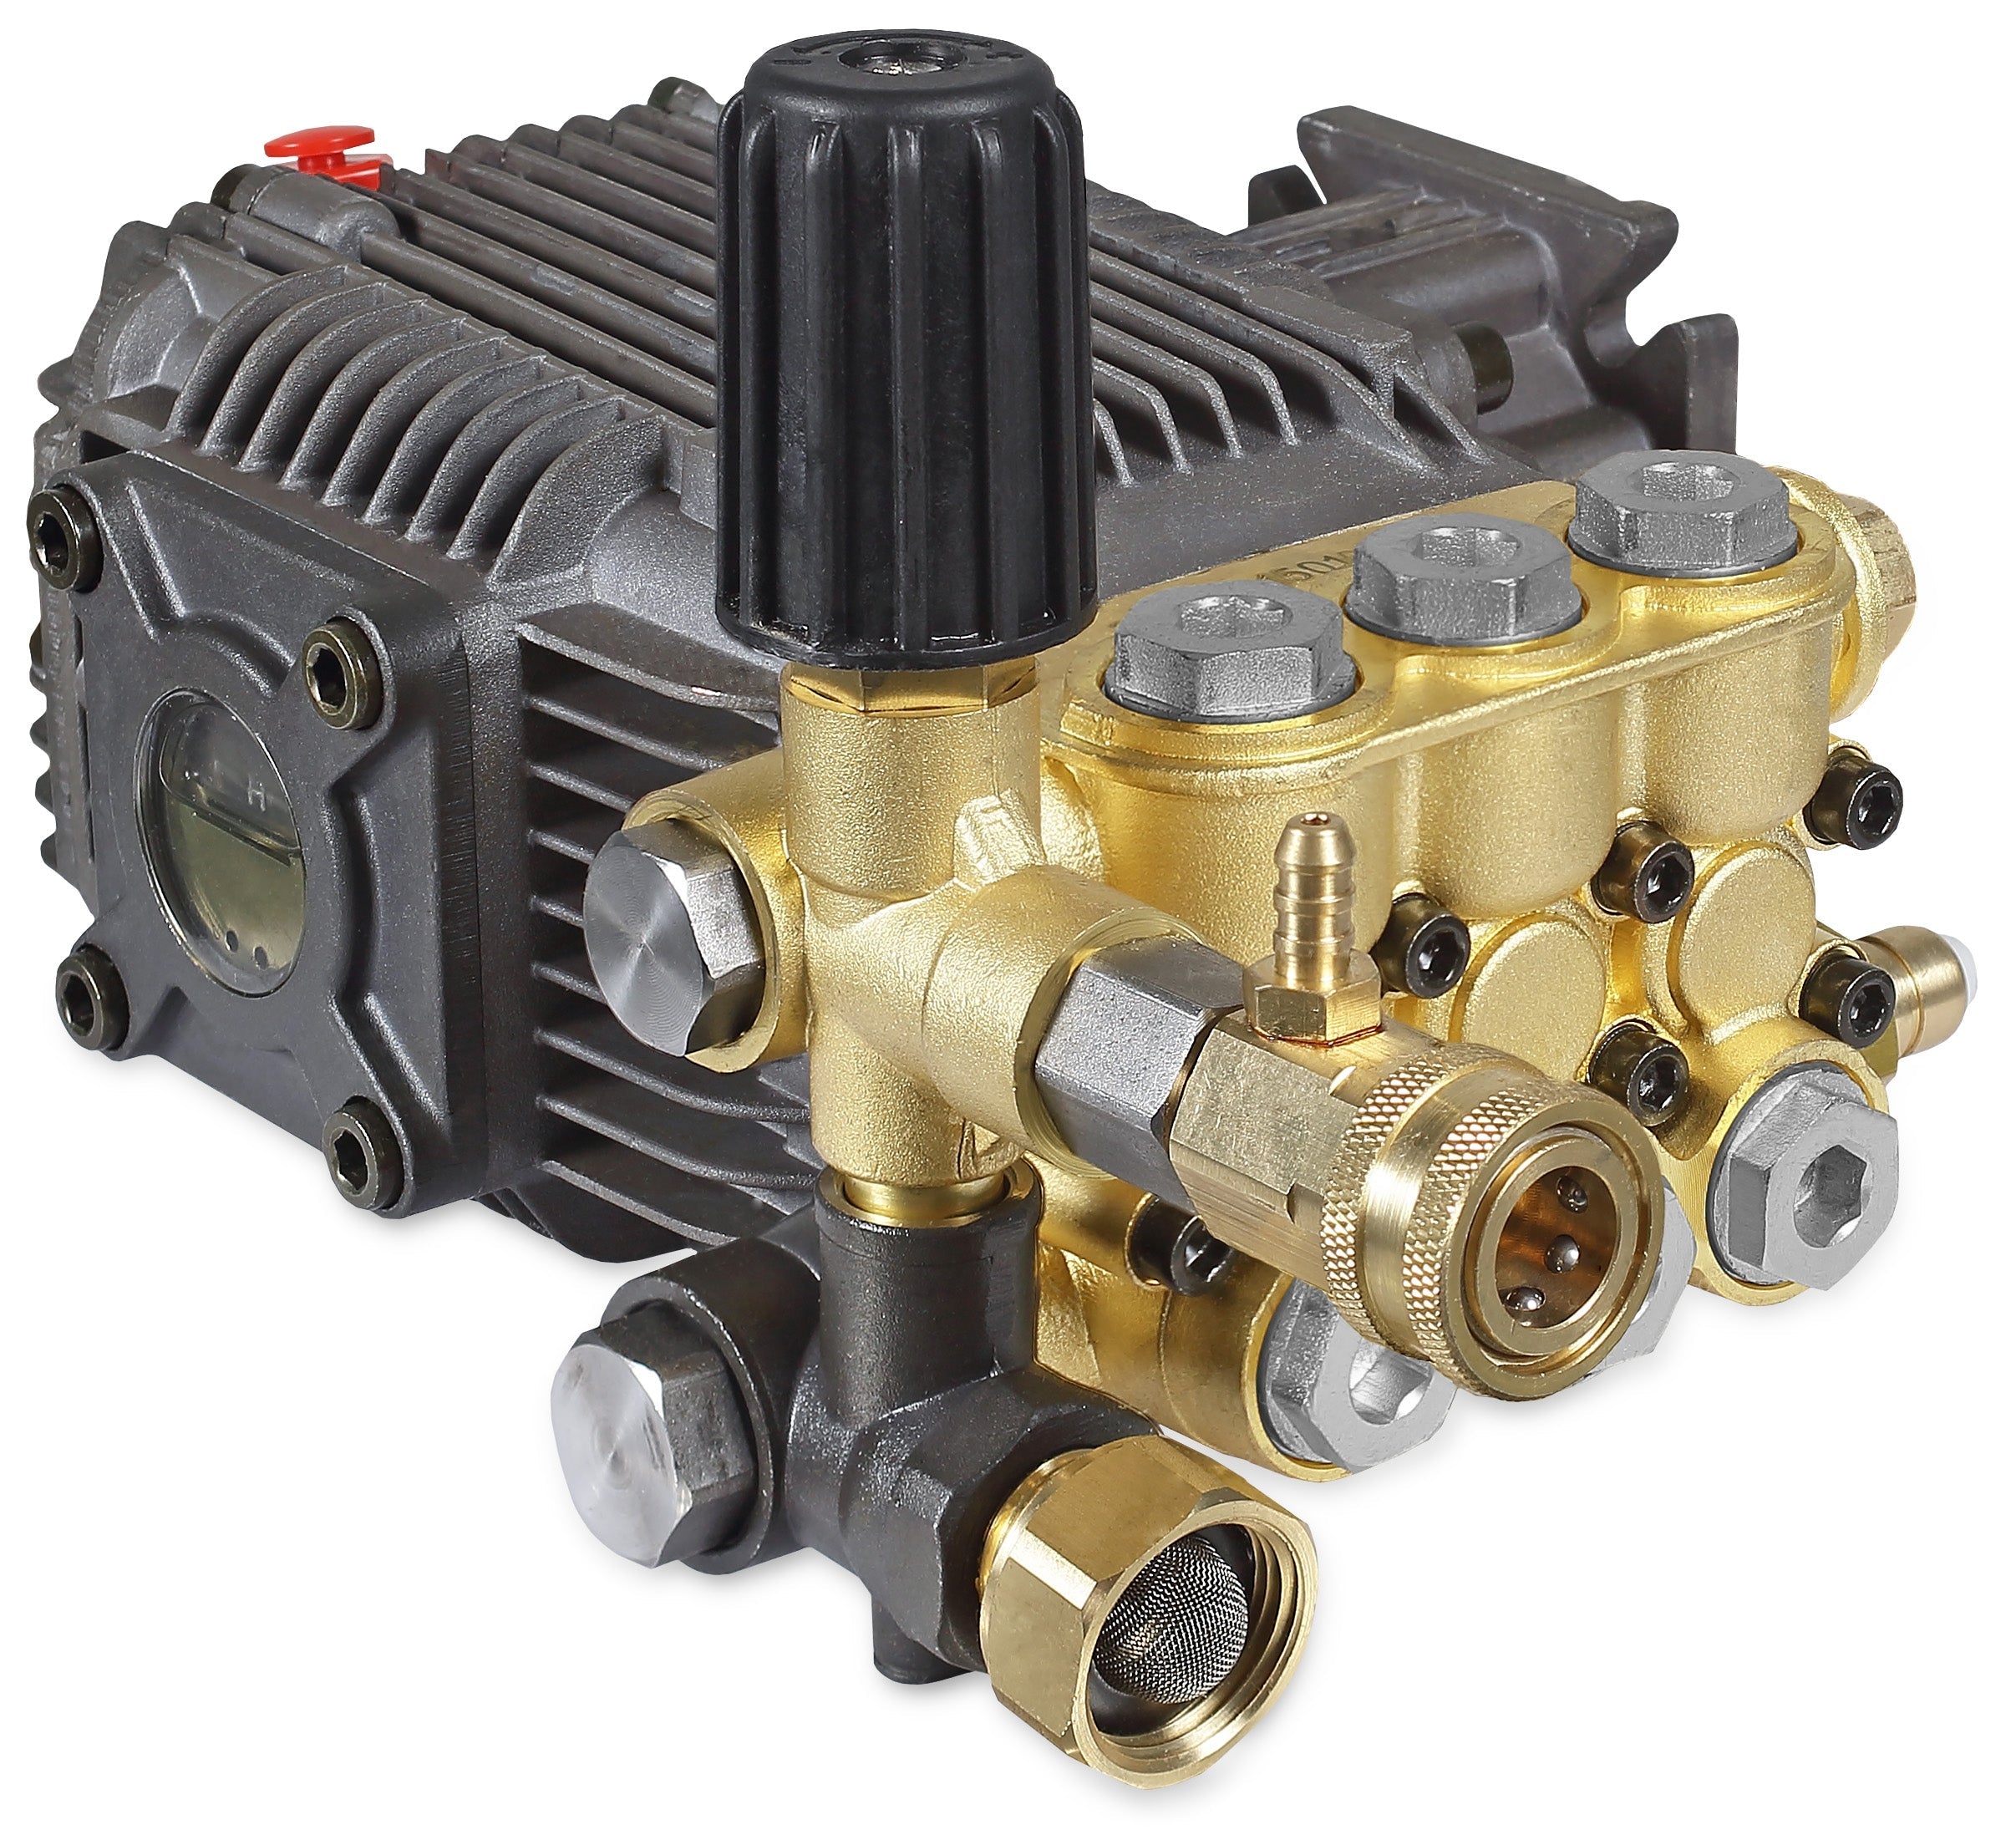 Mi-T-M 3-0414 Pressure Washer Pump, Triplex, 2.5GPM@3000 PSI, 3400 RPM, 3/4" Horizontal Shaft with Unloader